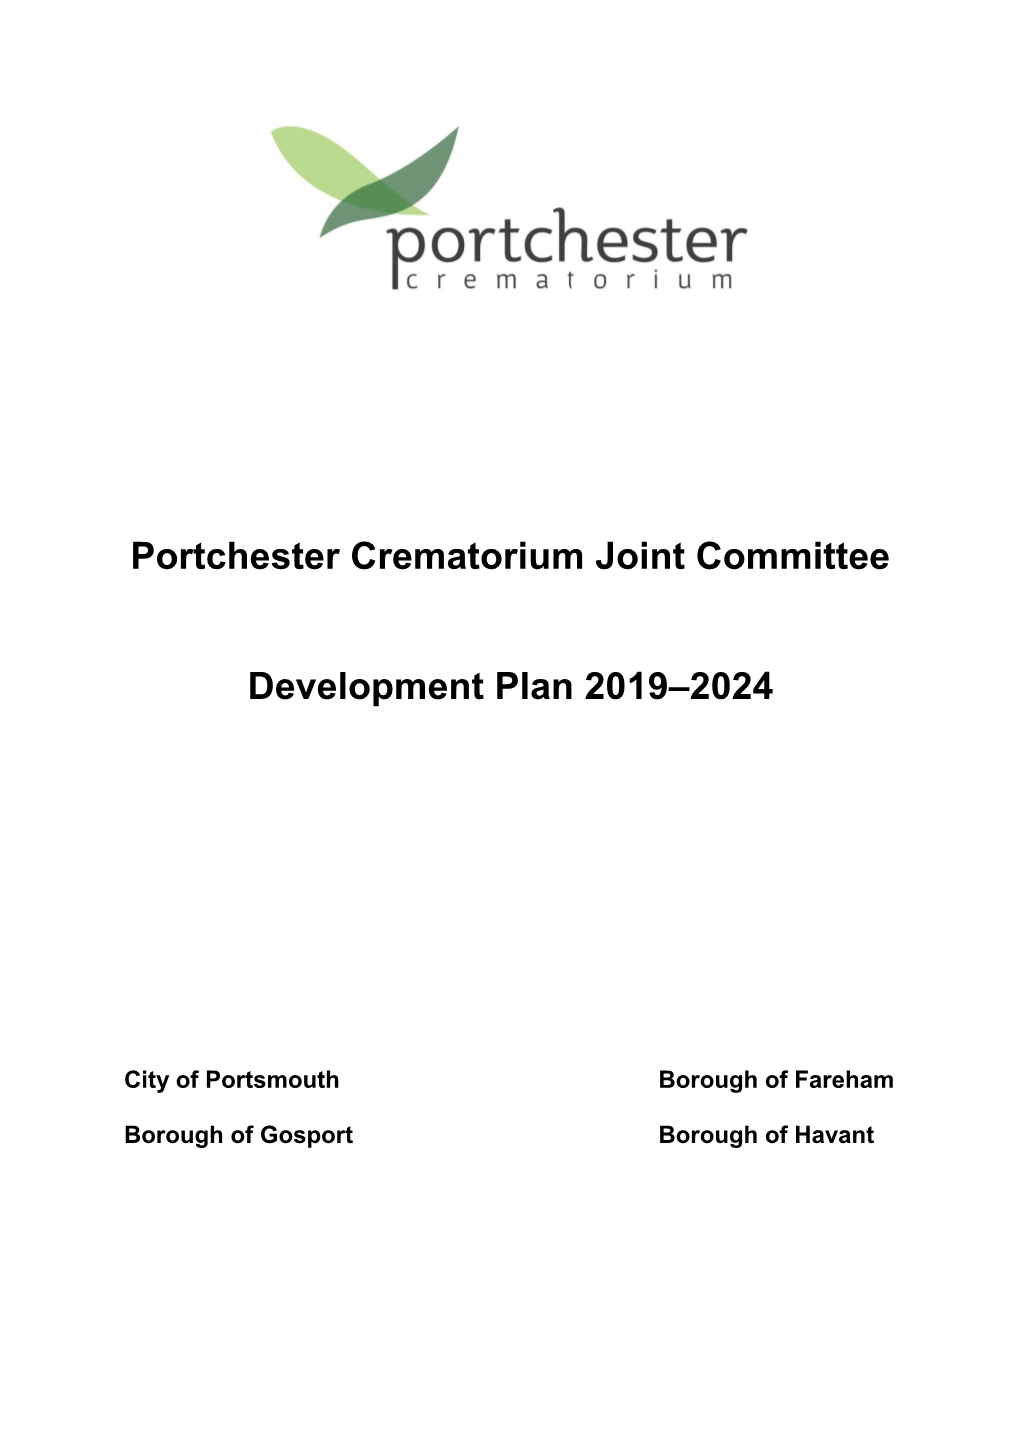 Portchester Crematorium Joint Committee Development Plan 2019 - 2024